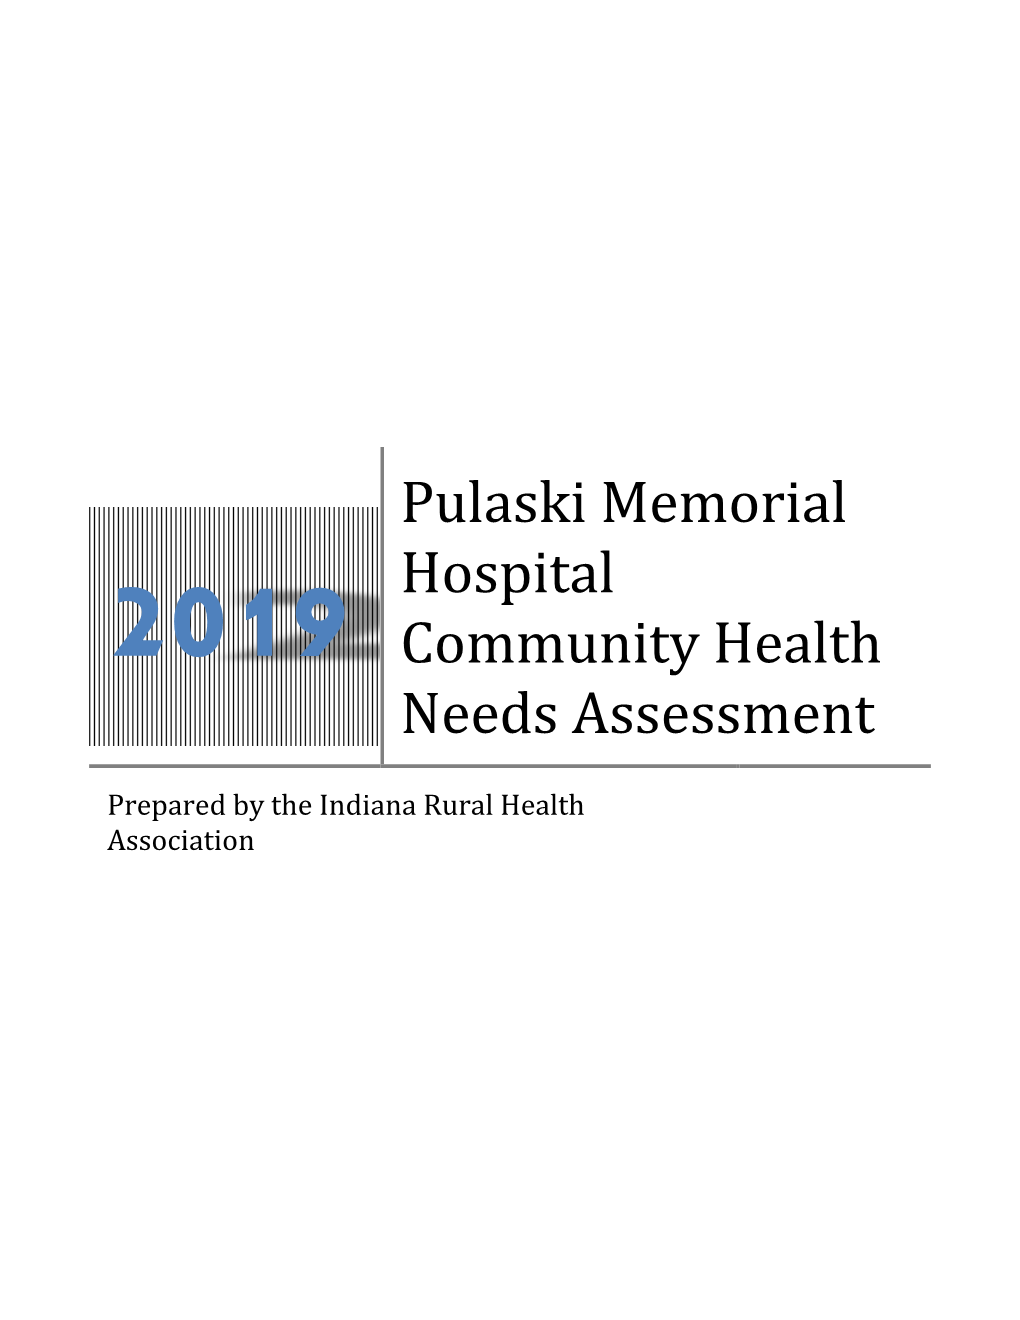 Pulaski Memorial Hospital Community Health Needs Assessment